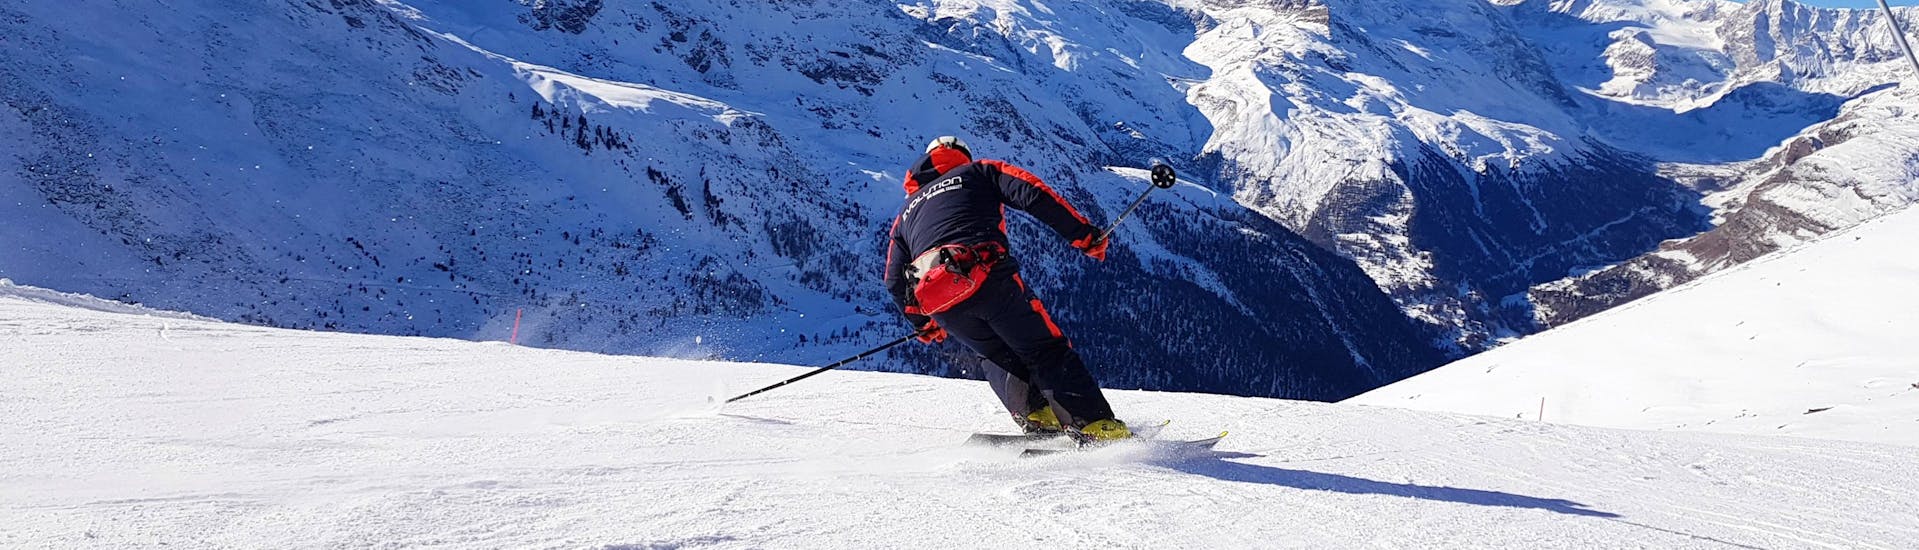 Private Ski Lessons for Adults of All Levels with Evolution Ski School Zermatt - Hero image